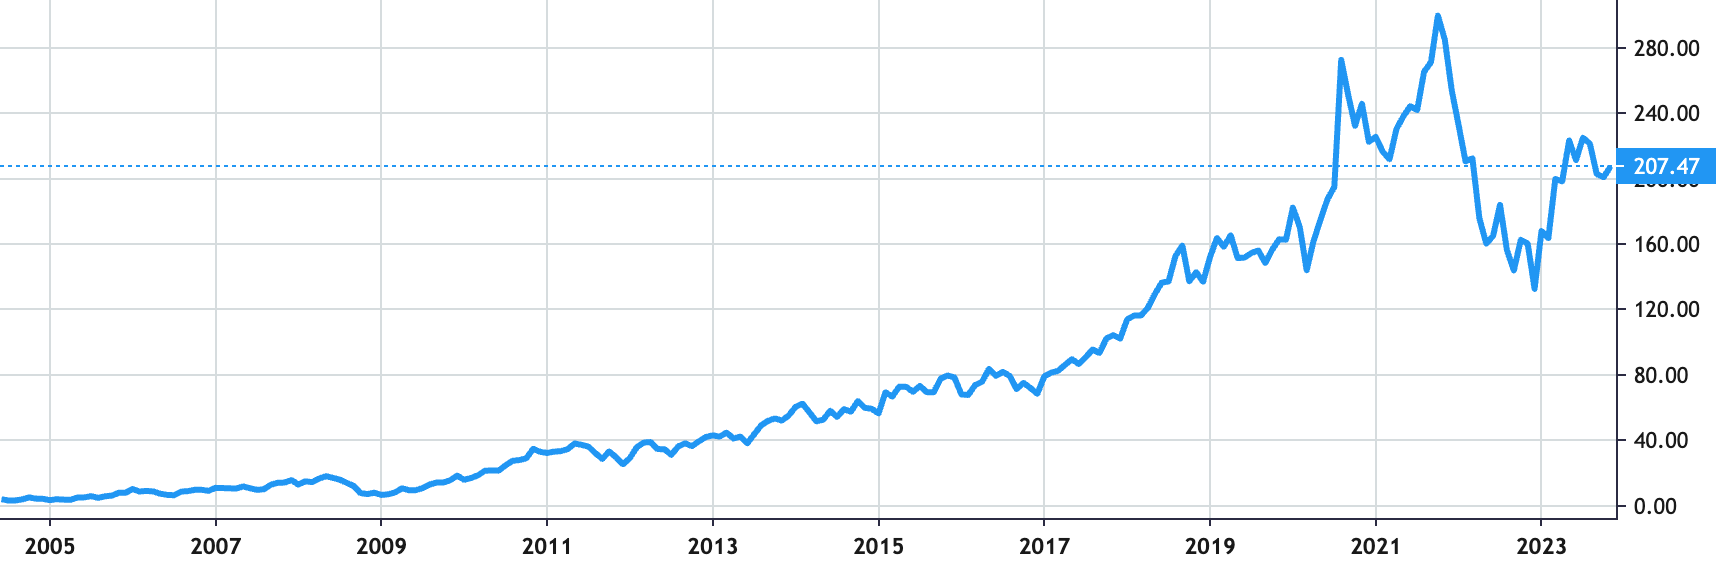 Salesforce share price history